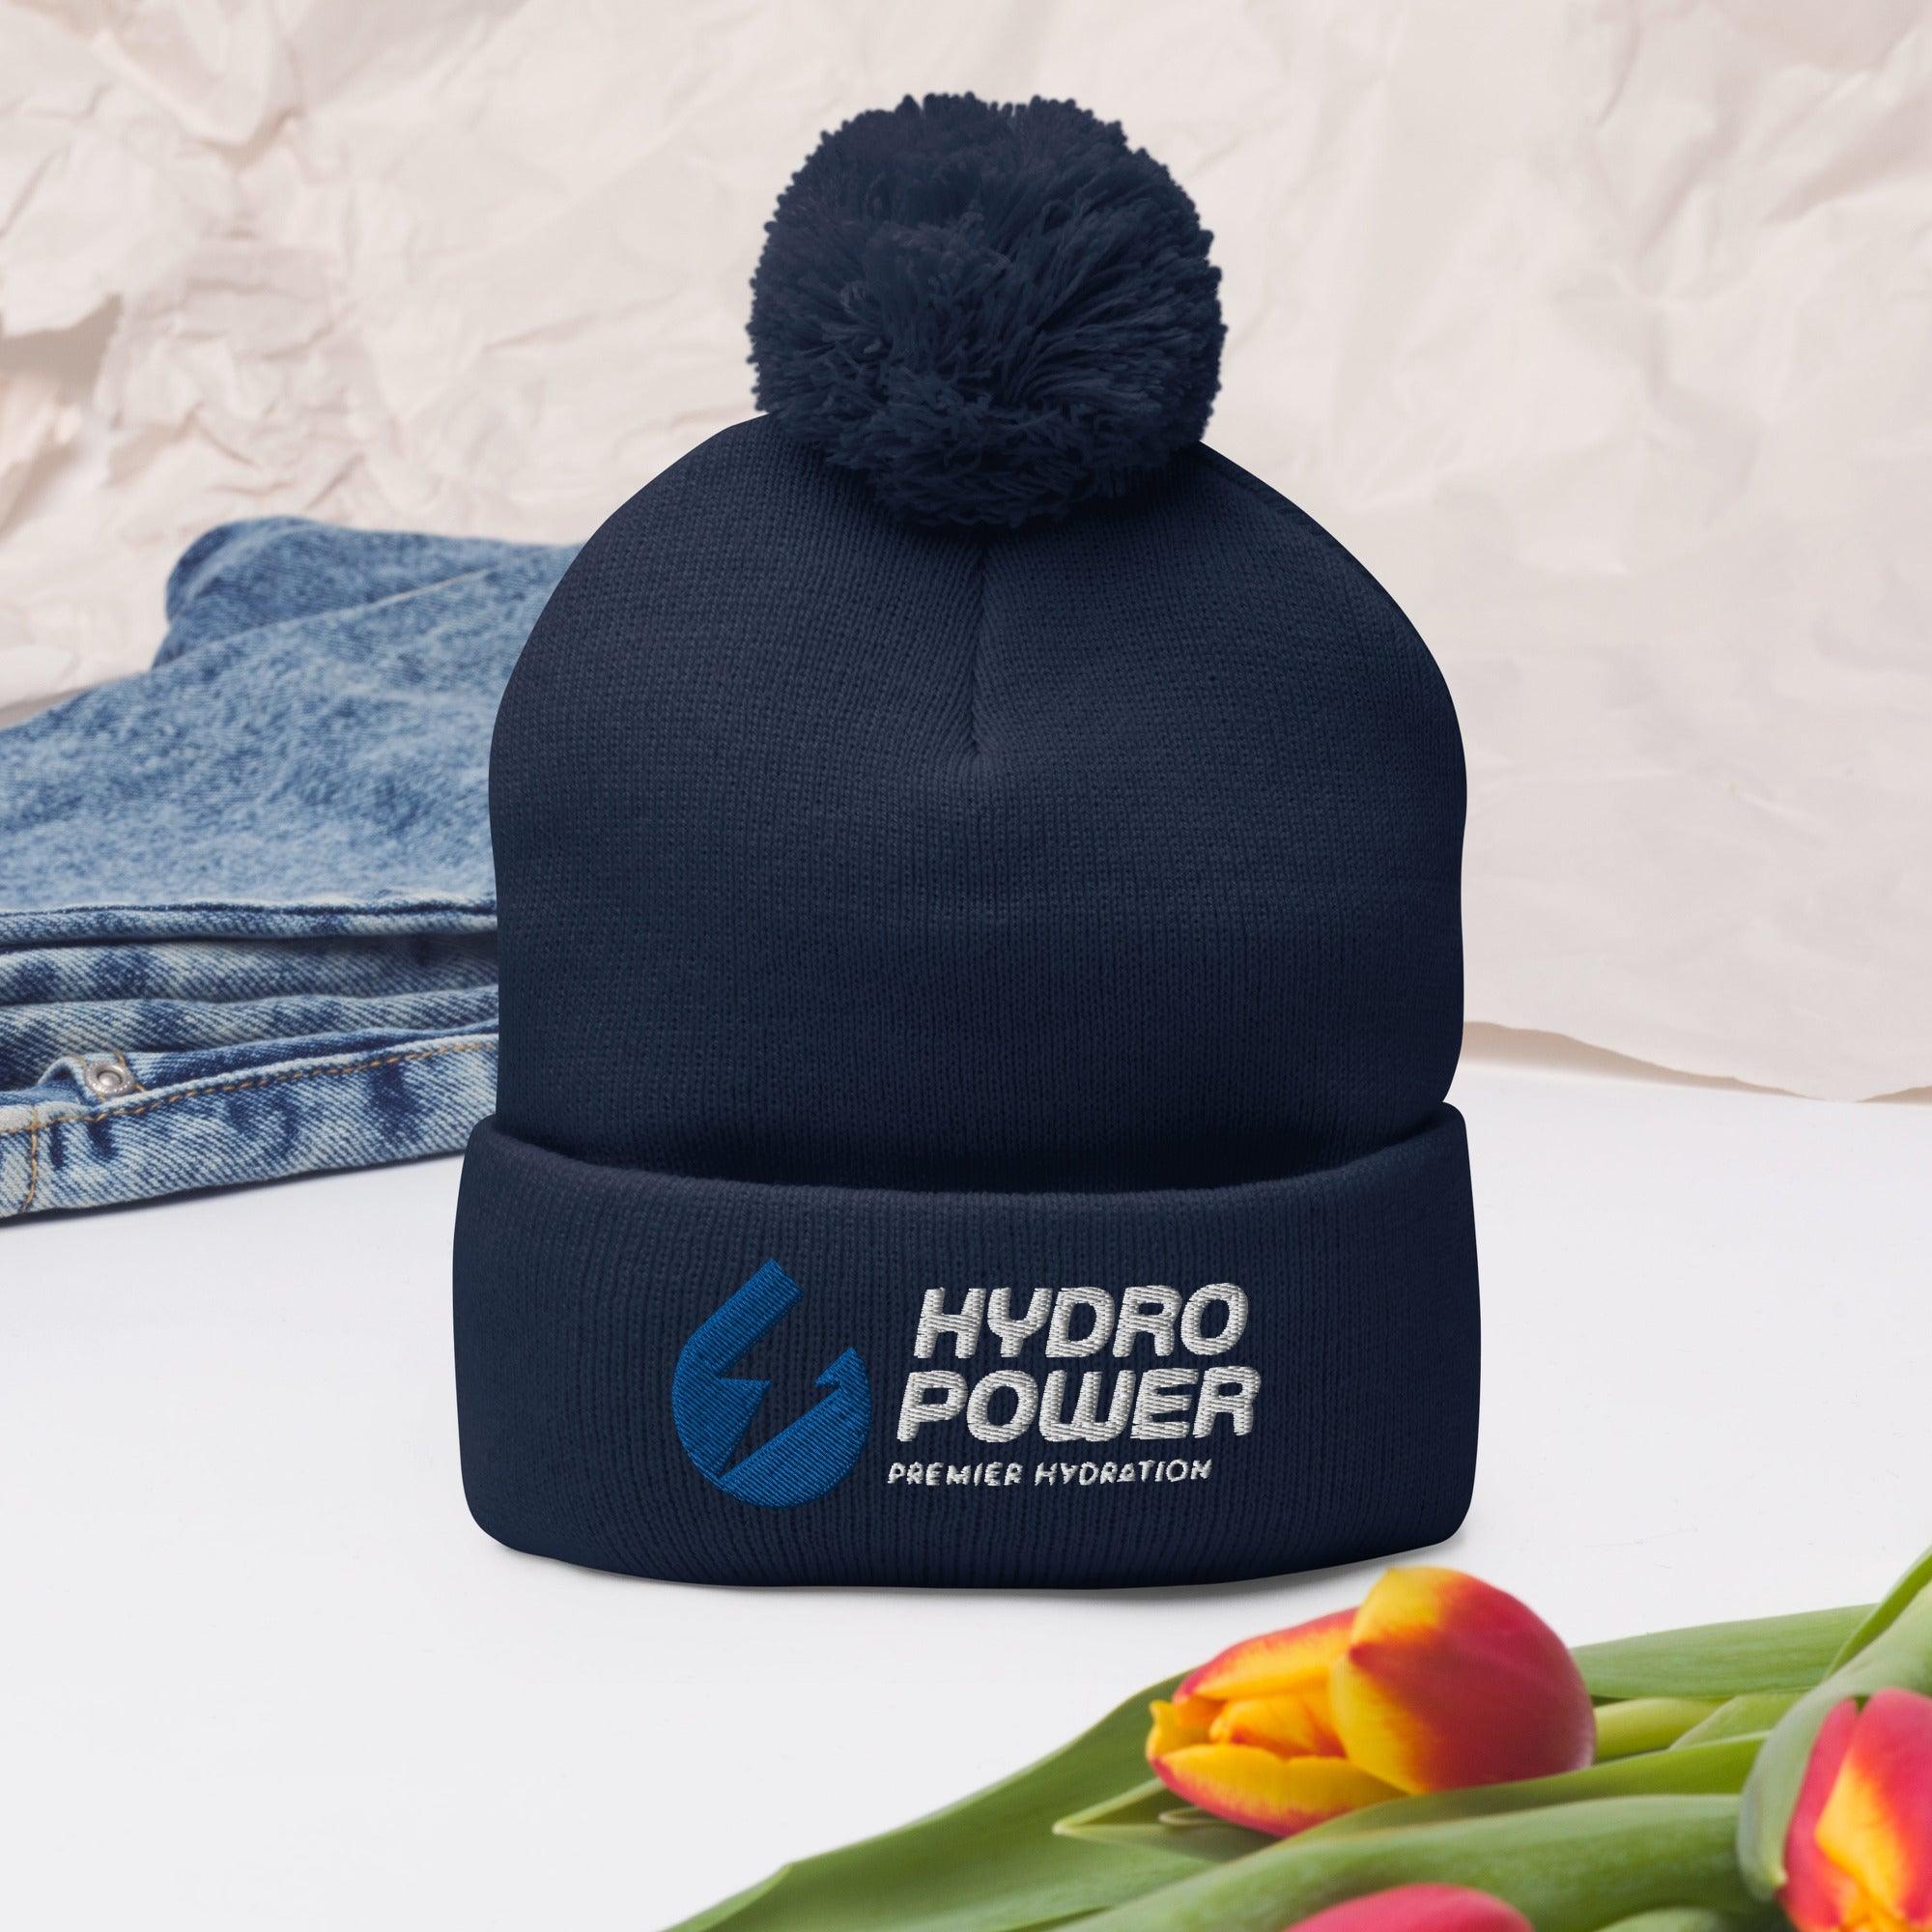 Hydro Power Pom-Pom Beanie Hydro Power